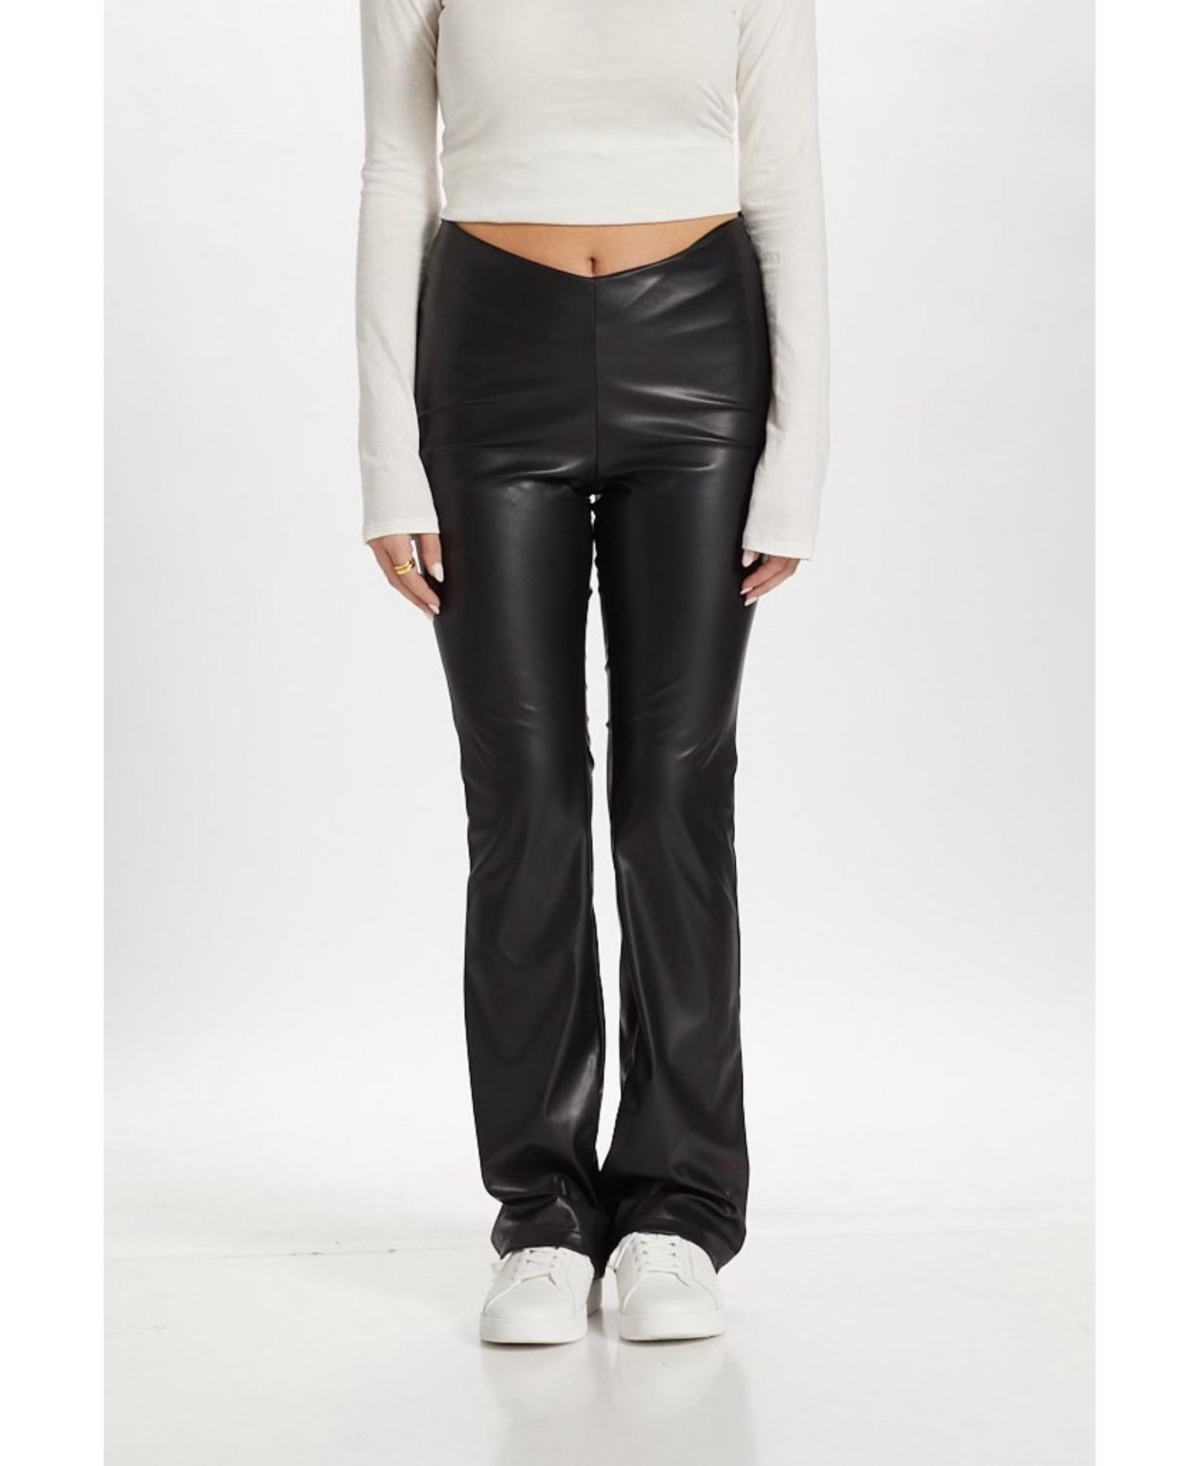 Women's Faux Leather Cinched Pants - Black